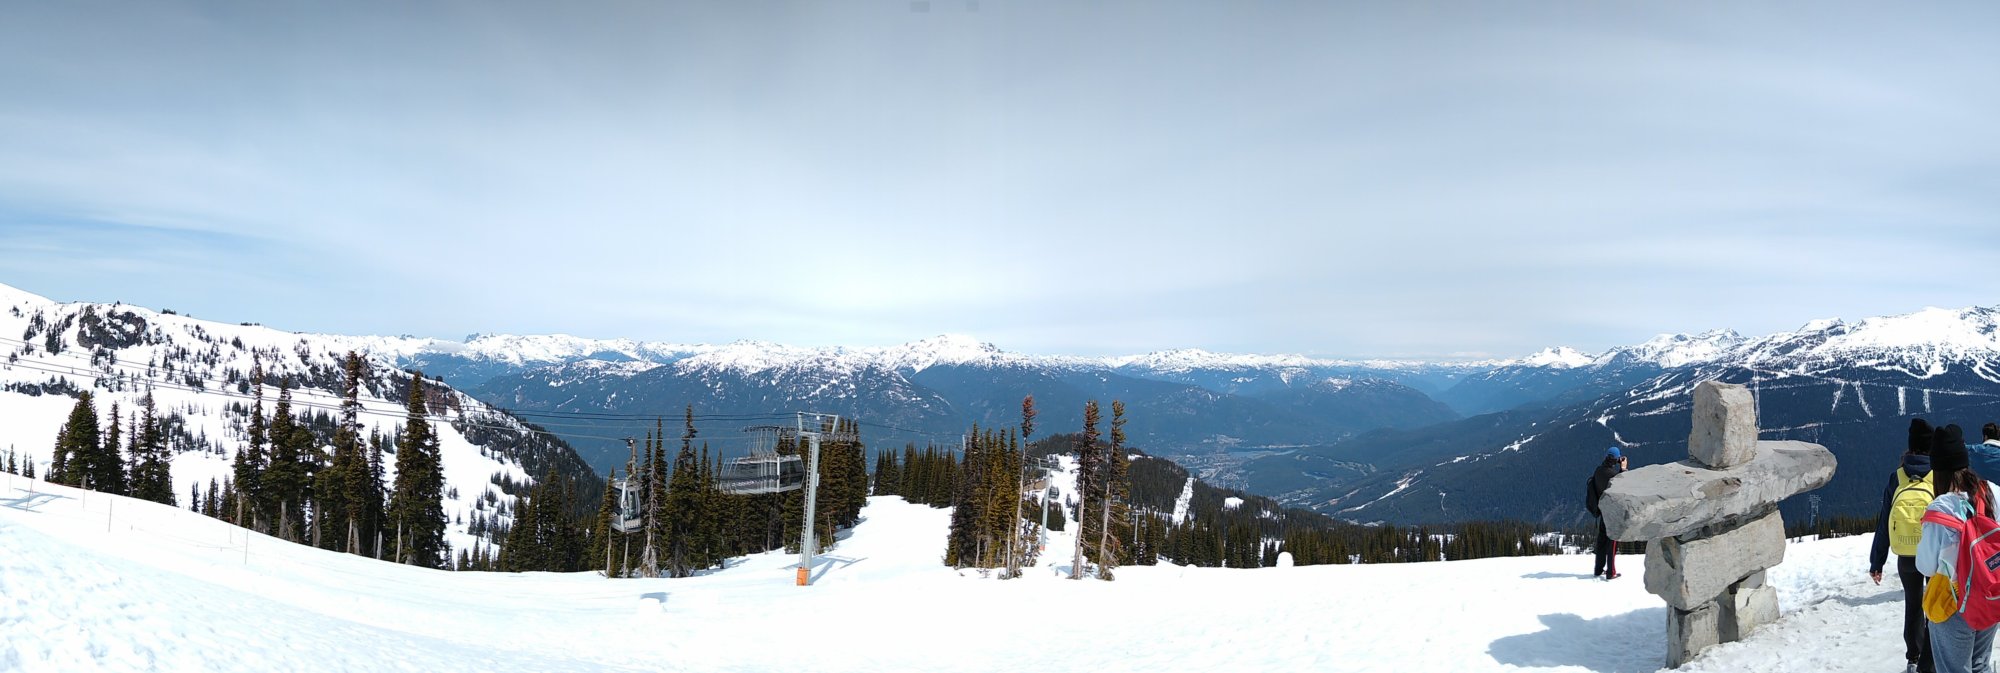 Panorama from Whistler Mountain